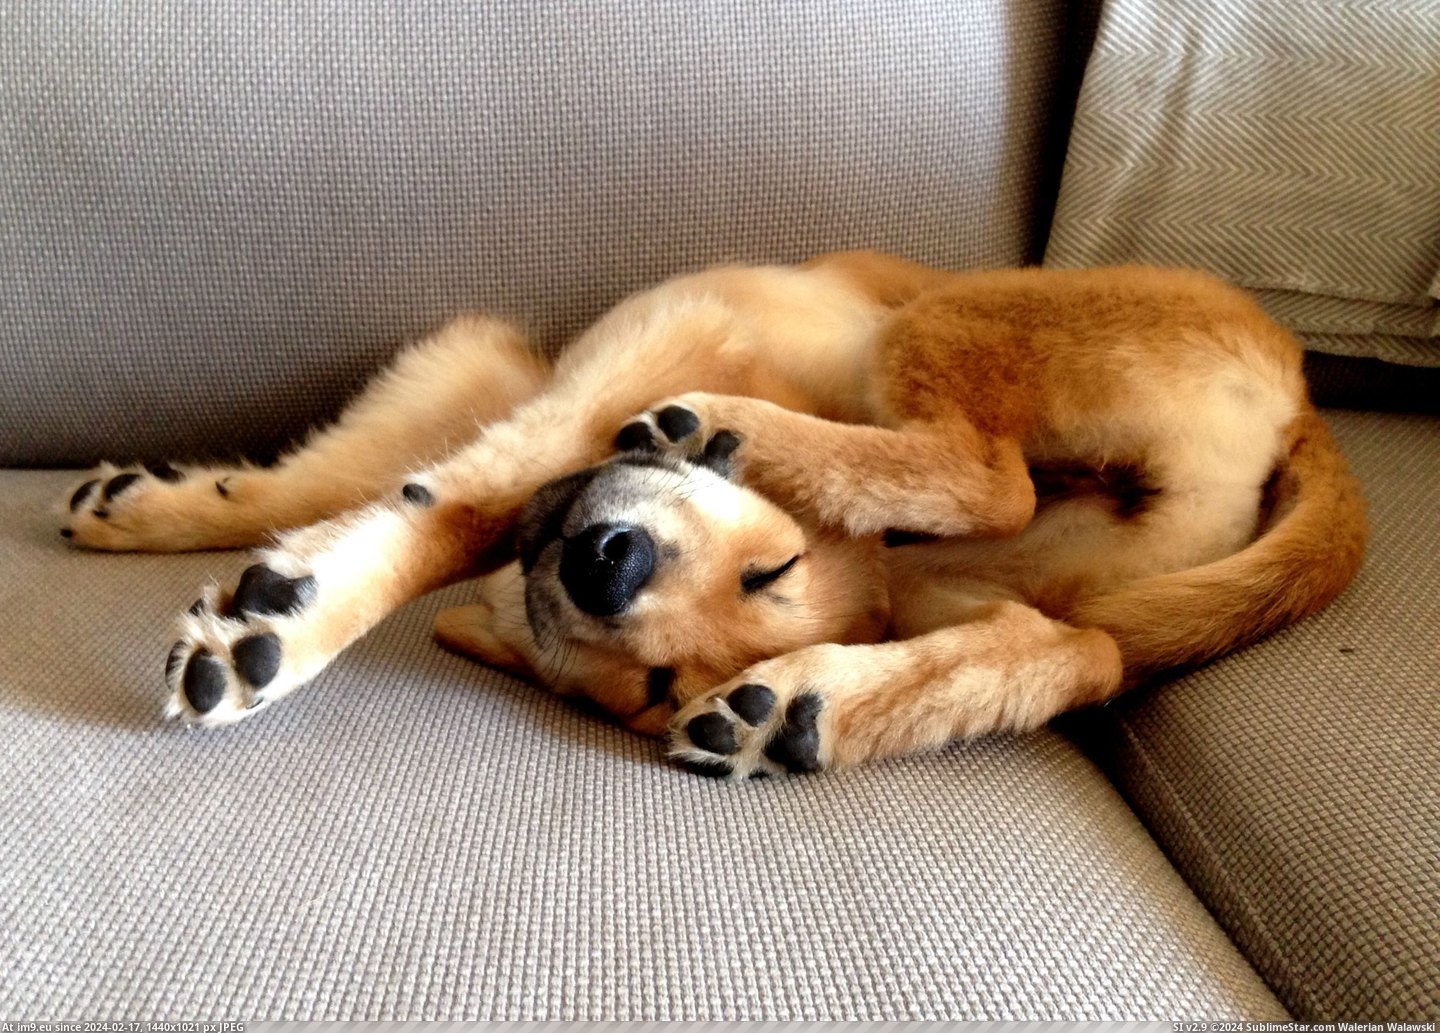 #Puppy  #Pretzel [Aww] Puppy pretzel Pic. (Изображение из альбом My r/AWW favs))